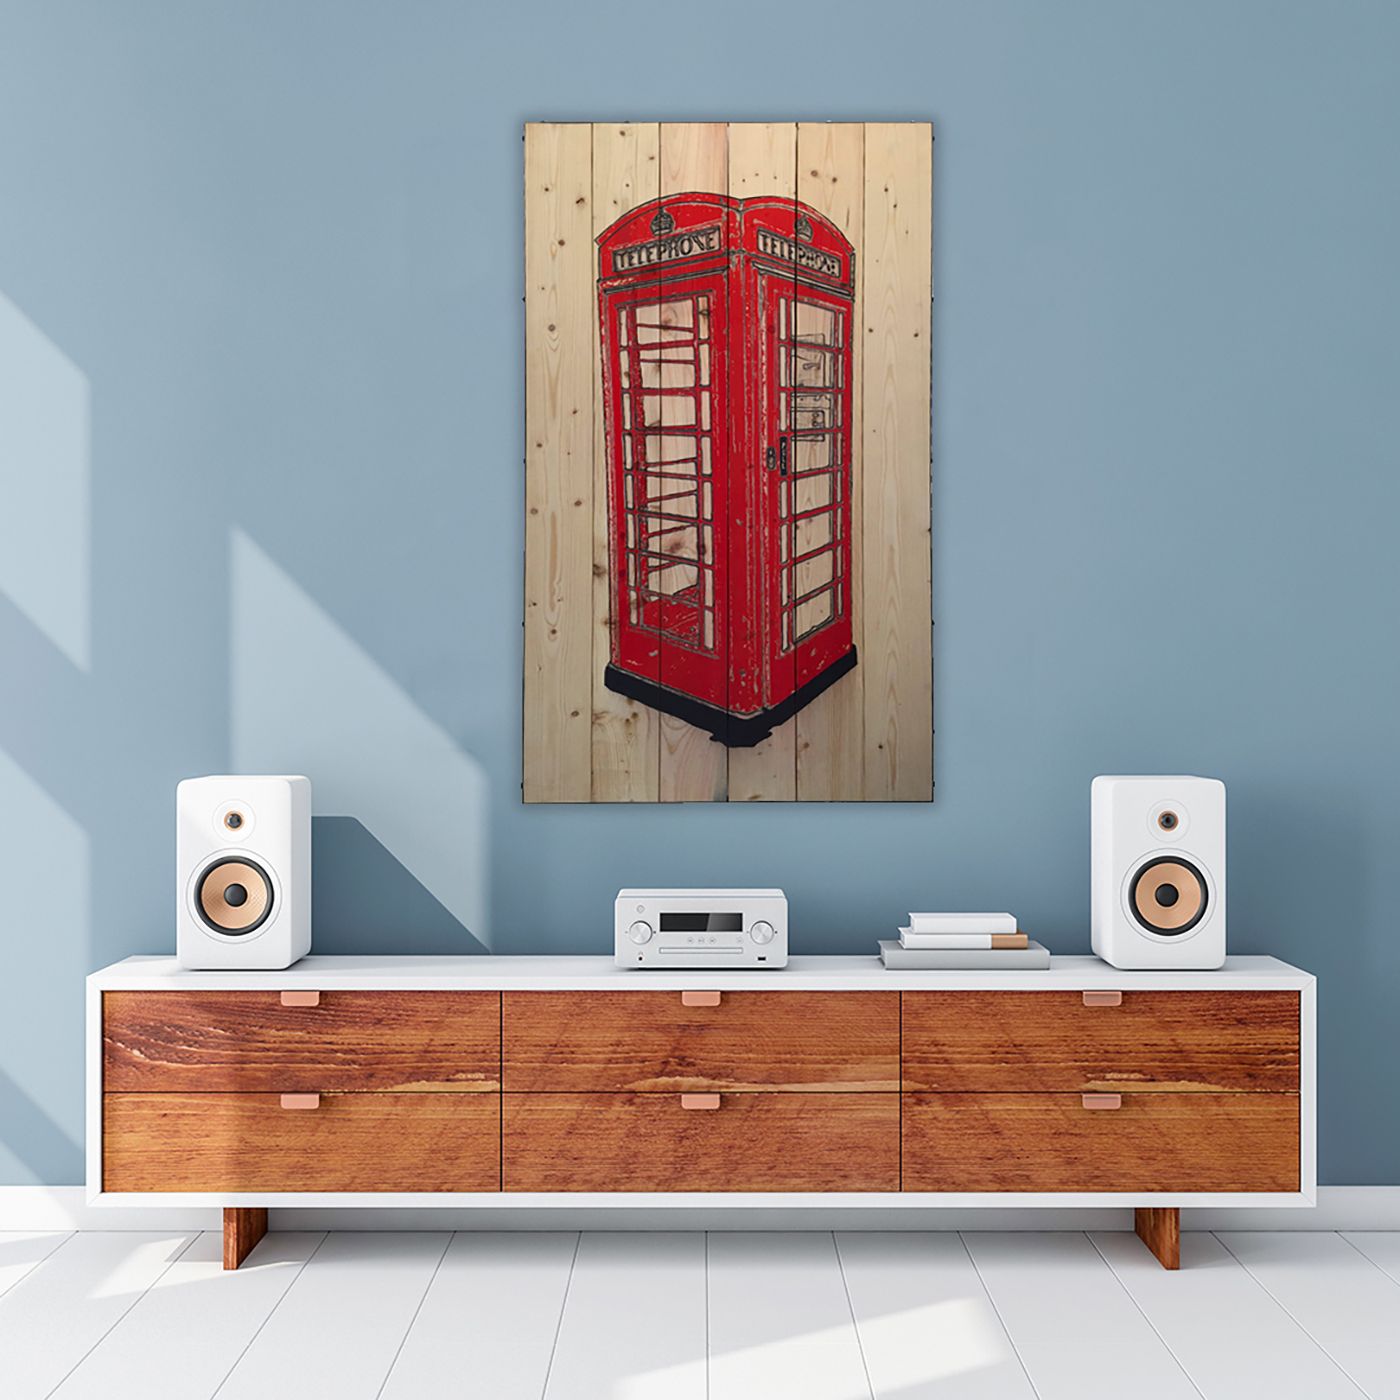 London Phone Box by Michael Wallner - Secondary Image